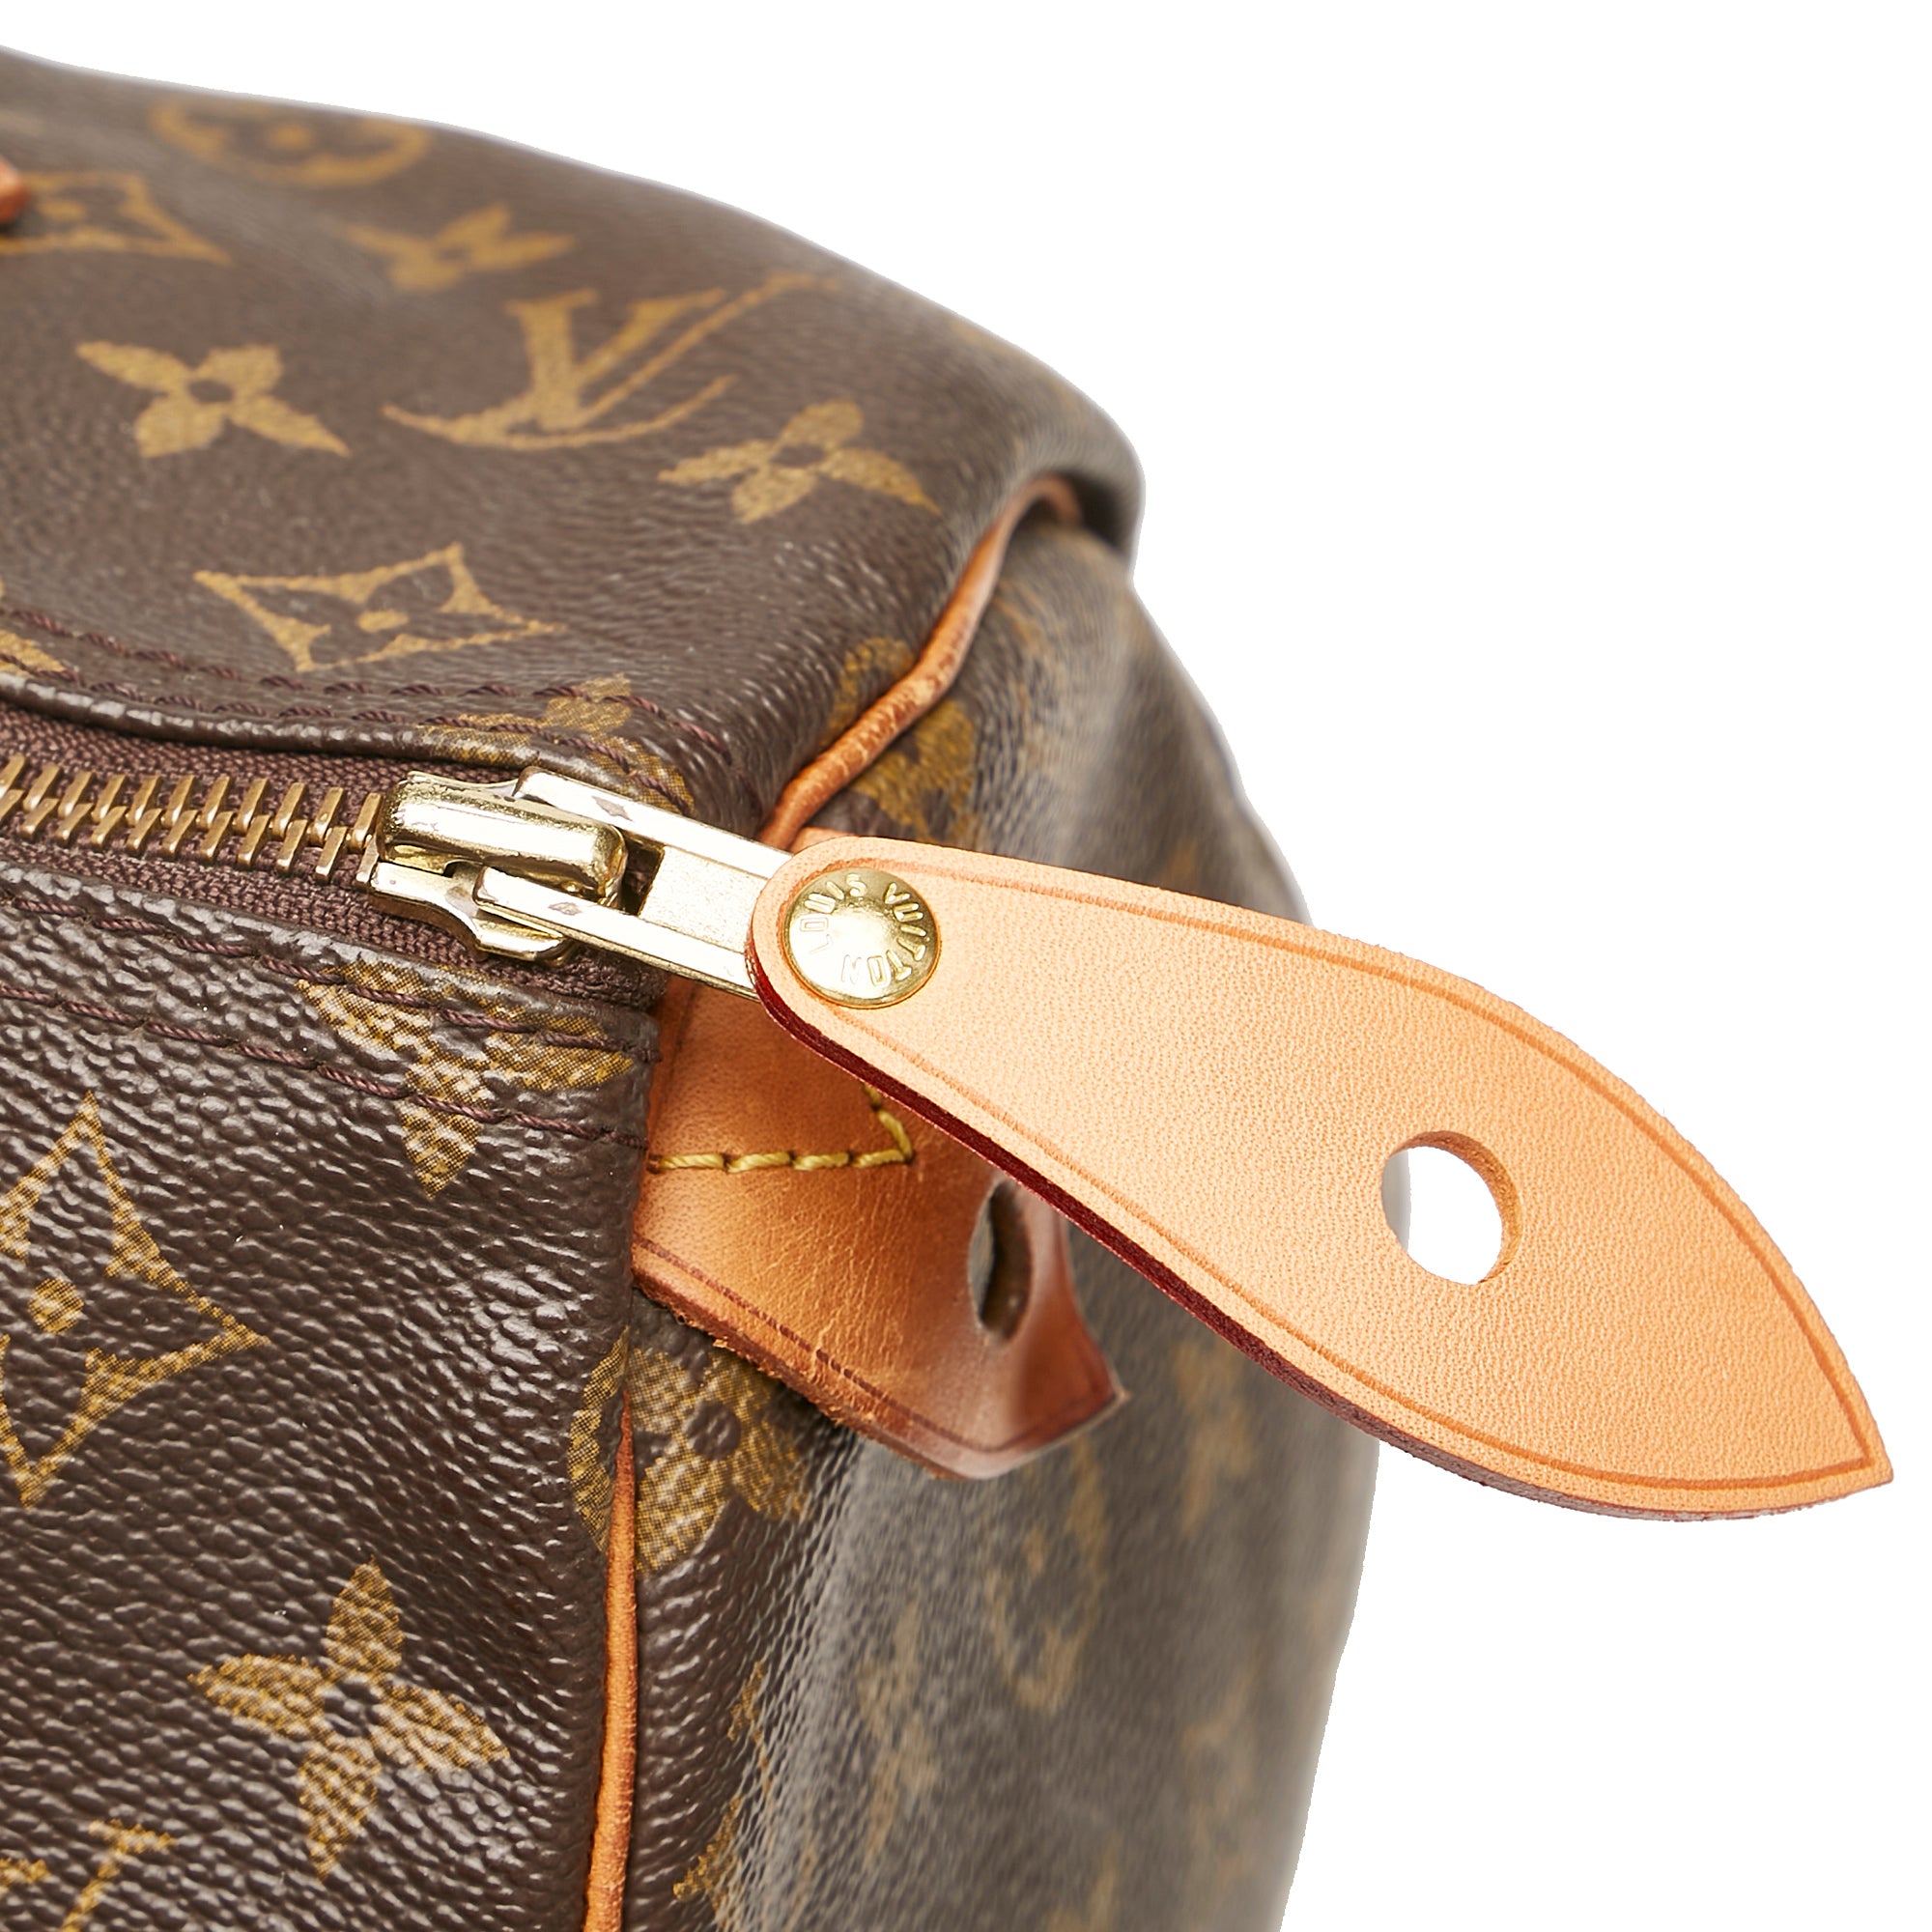 Louis Vuitton Speedy Handbag 399457